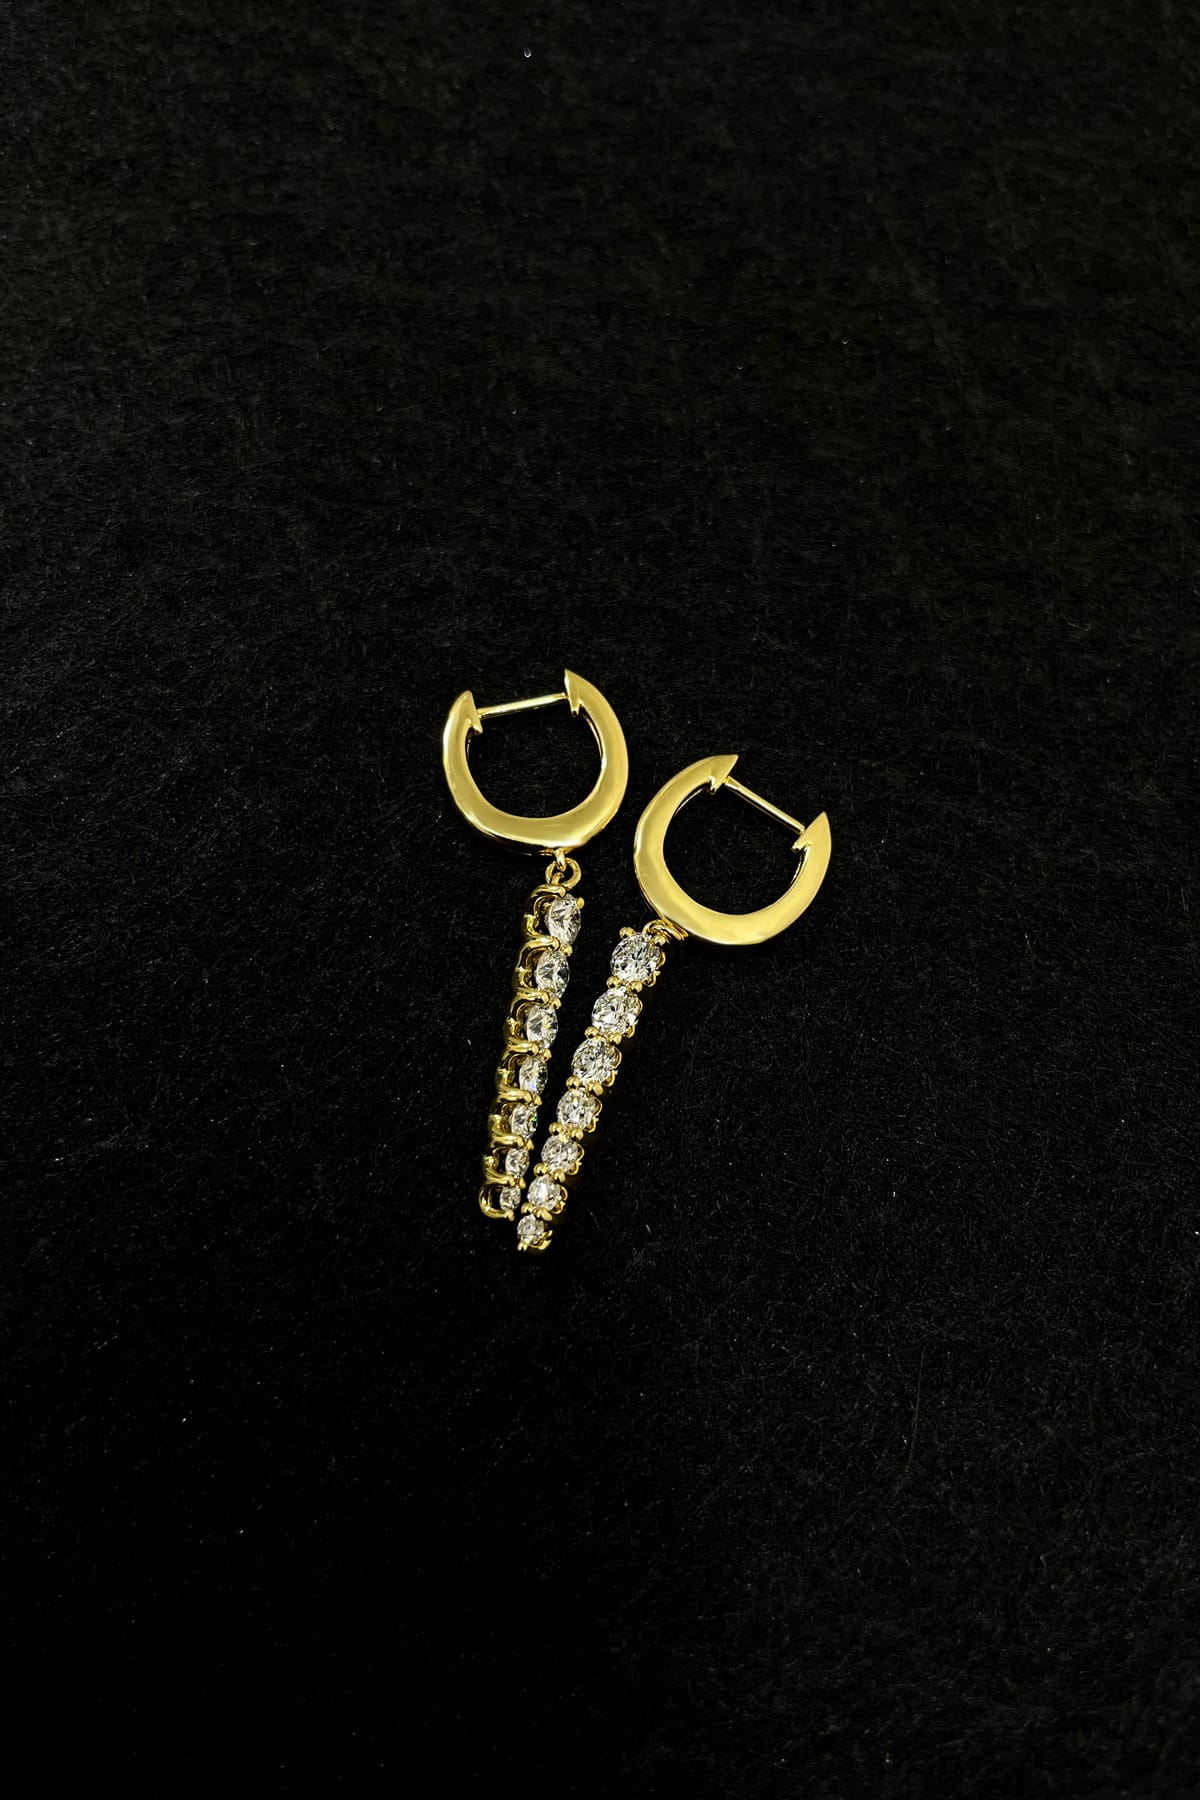 18 Carat Yellow Gold Identity Drop Earrings available at LeGassick Diamonds and Jewellery Gold Coast, Australia.